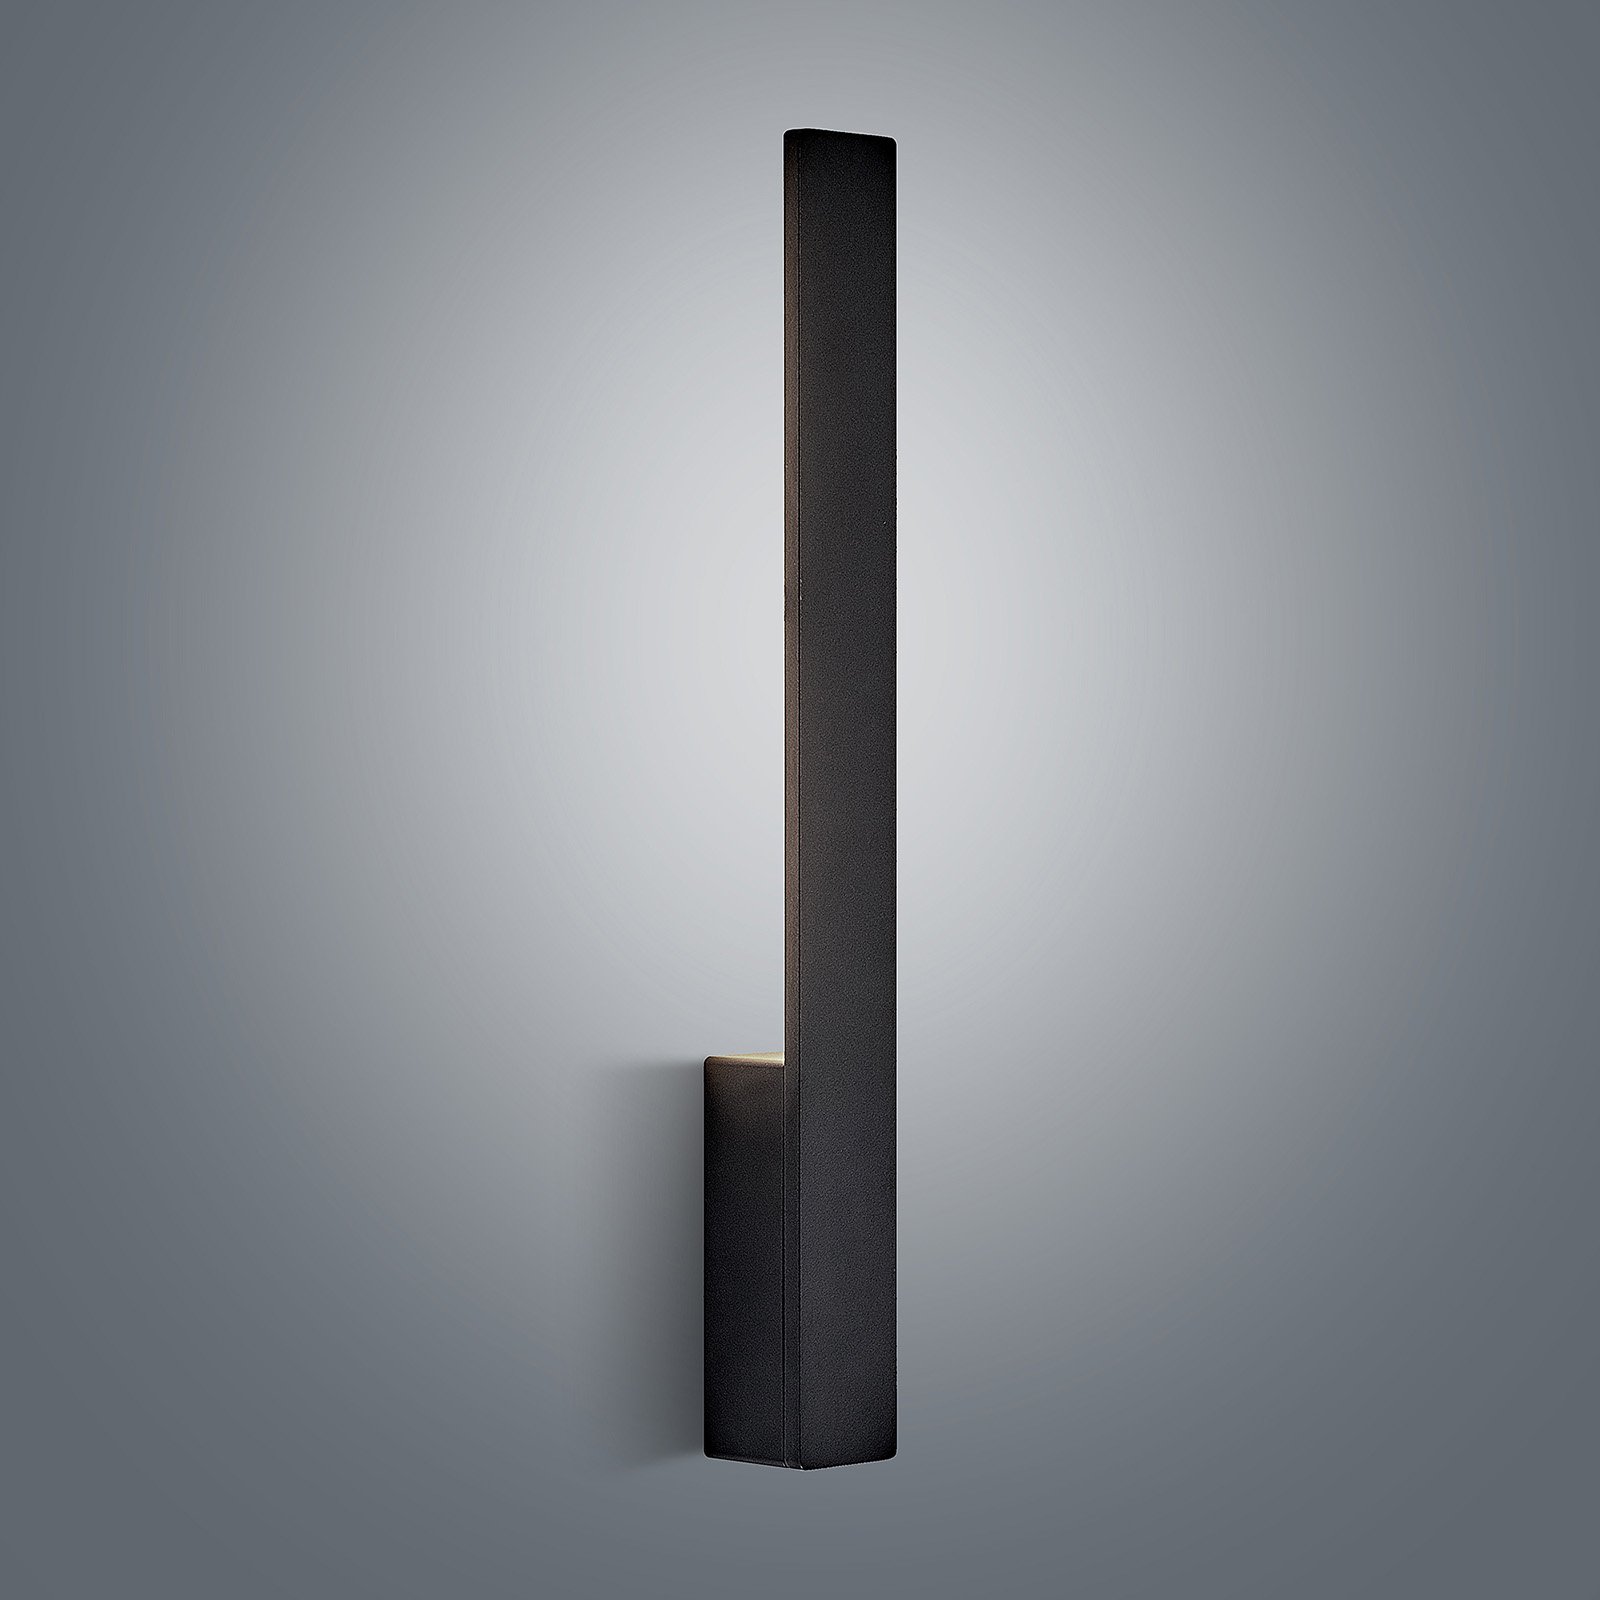 Nástenné svietidlo Arcchio Ivano LED, 42,5 cm, čierne